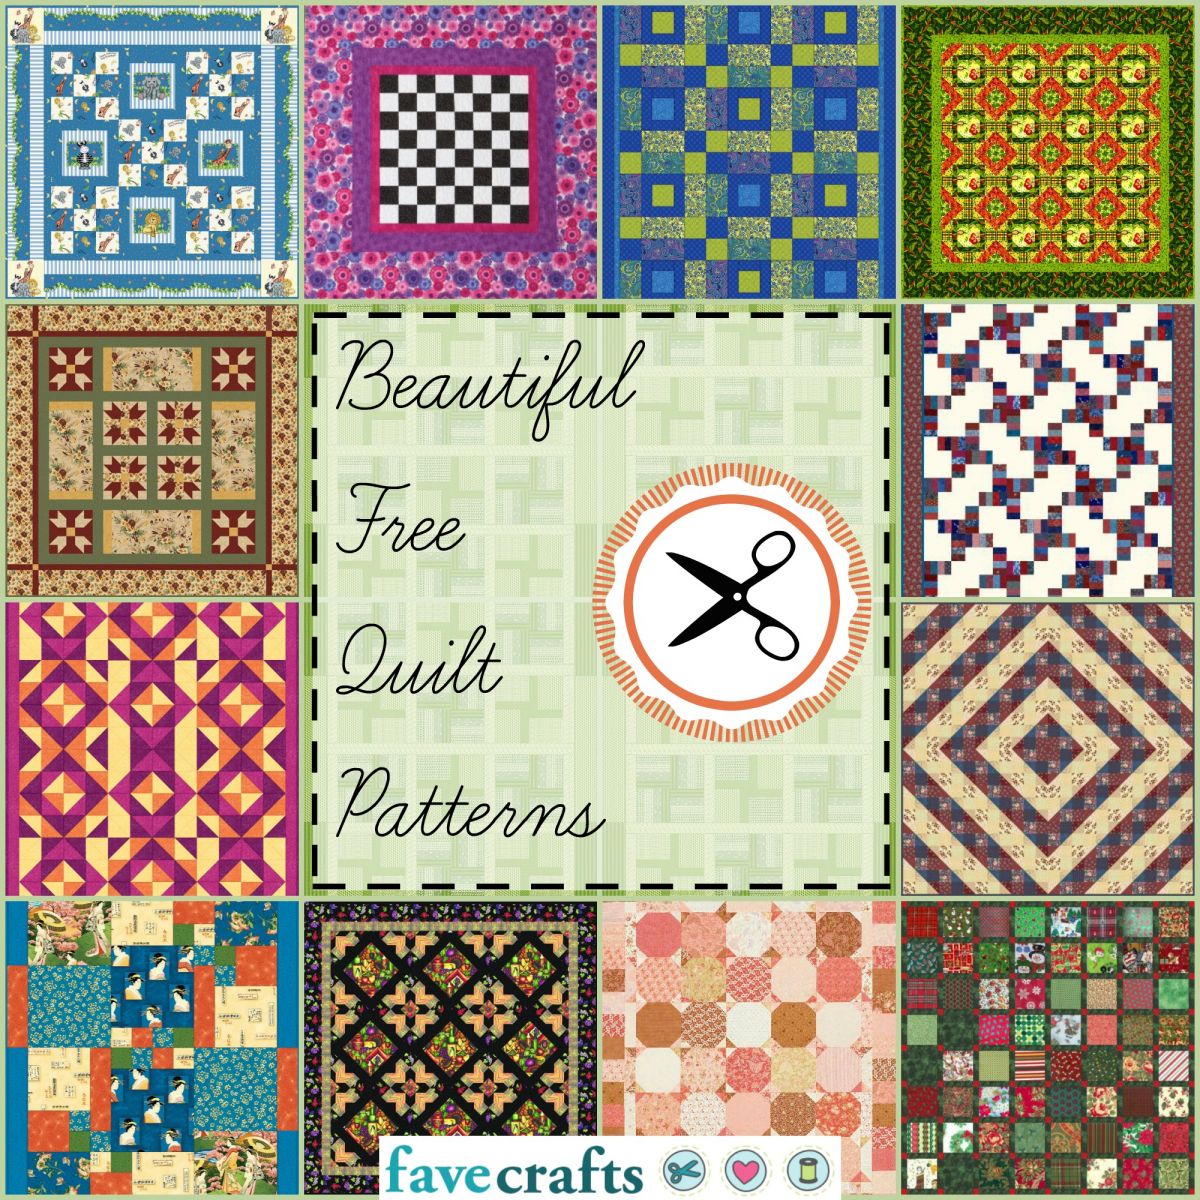 38-free-quilt-patterns-favecrafts